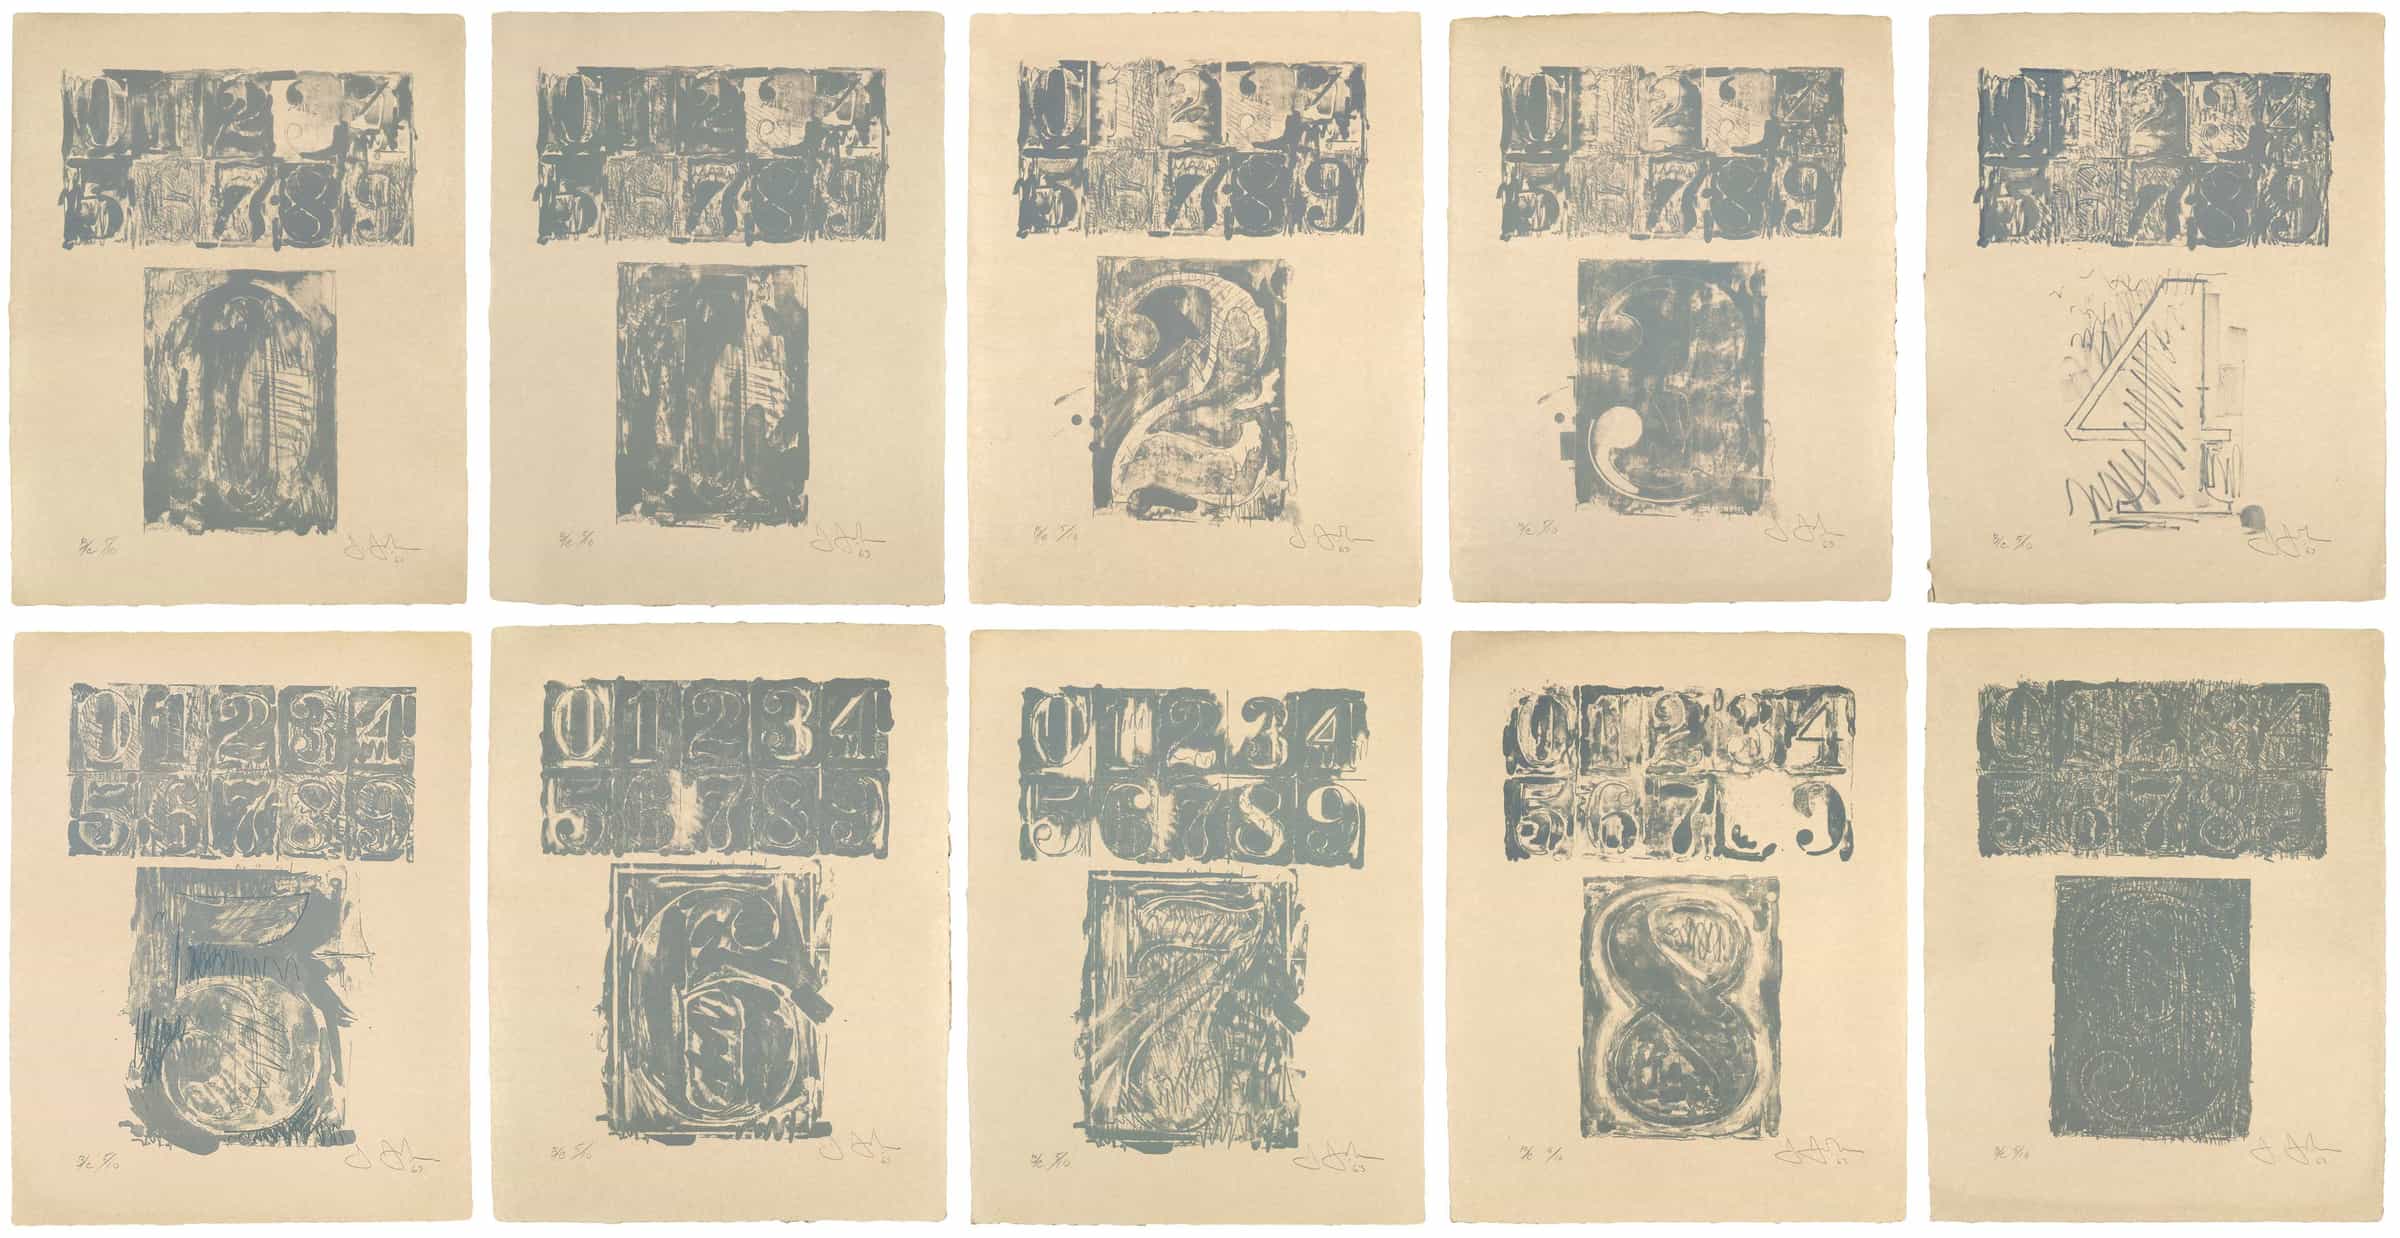 Jasper Johns, 0-9 (Gray), 1963